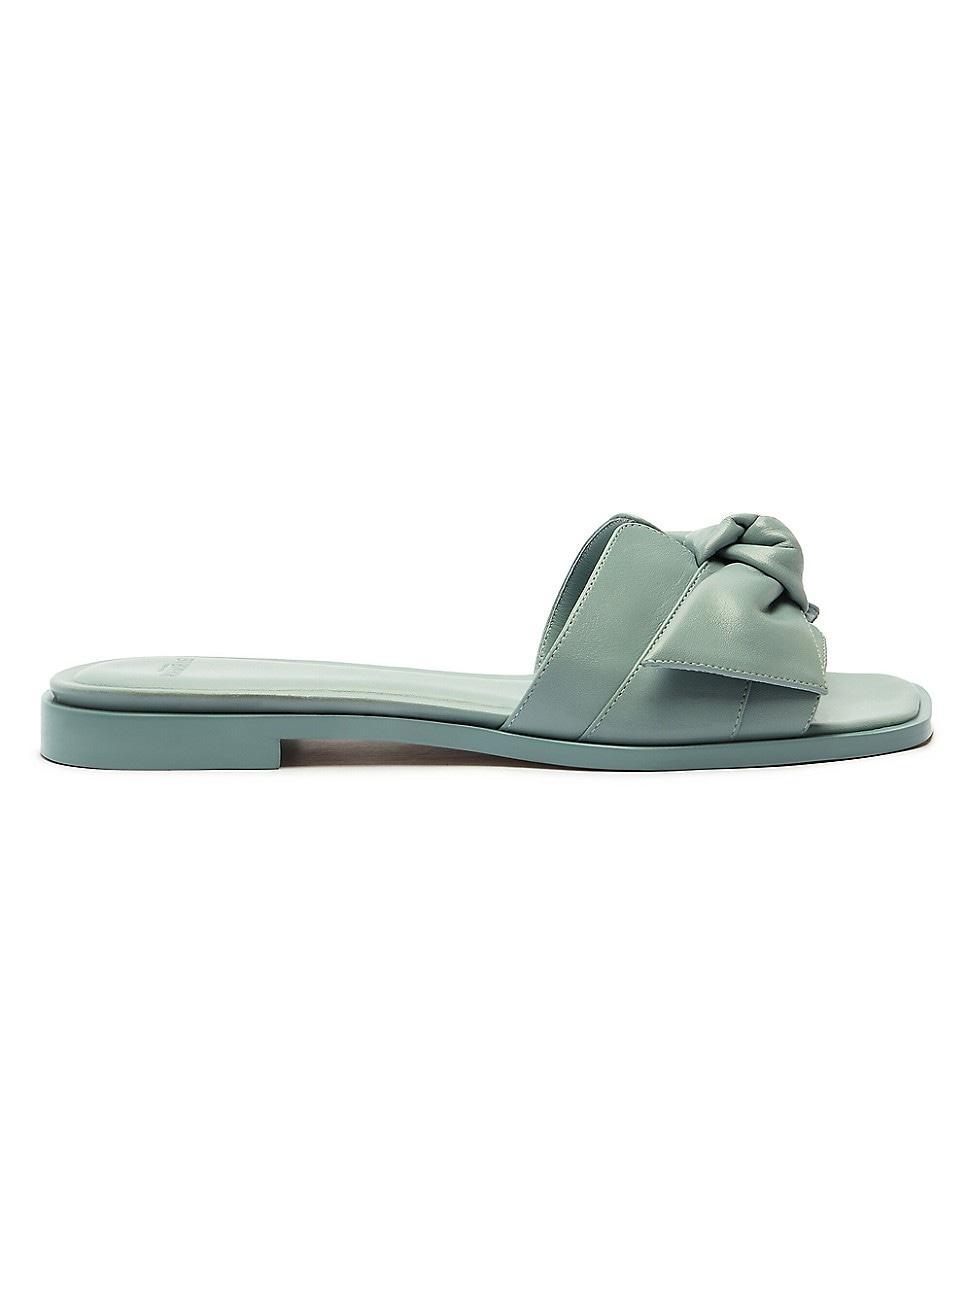 Givenchy 4G Slide Sandal Product Image